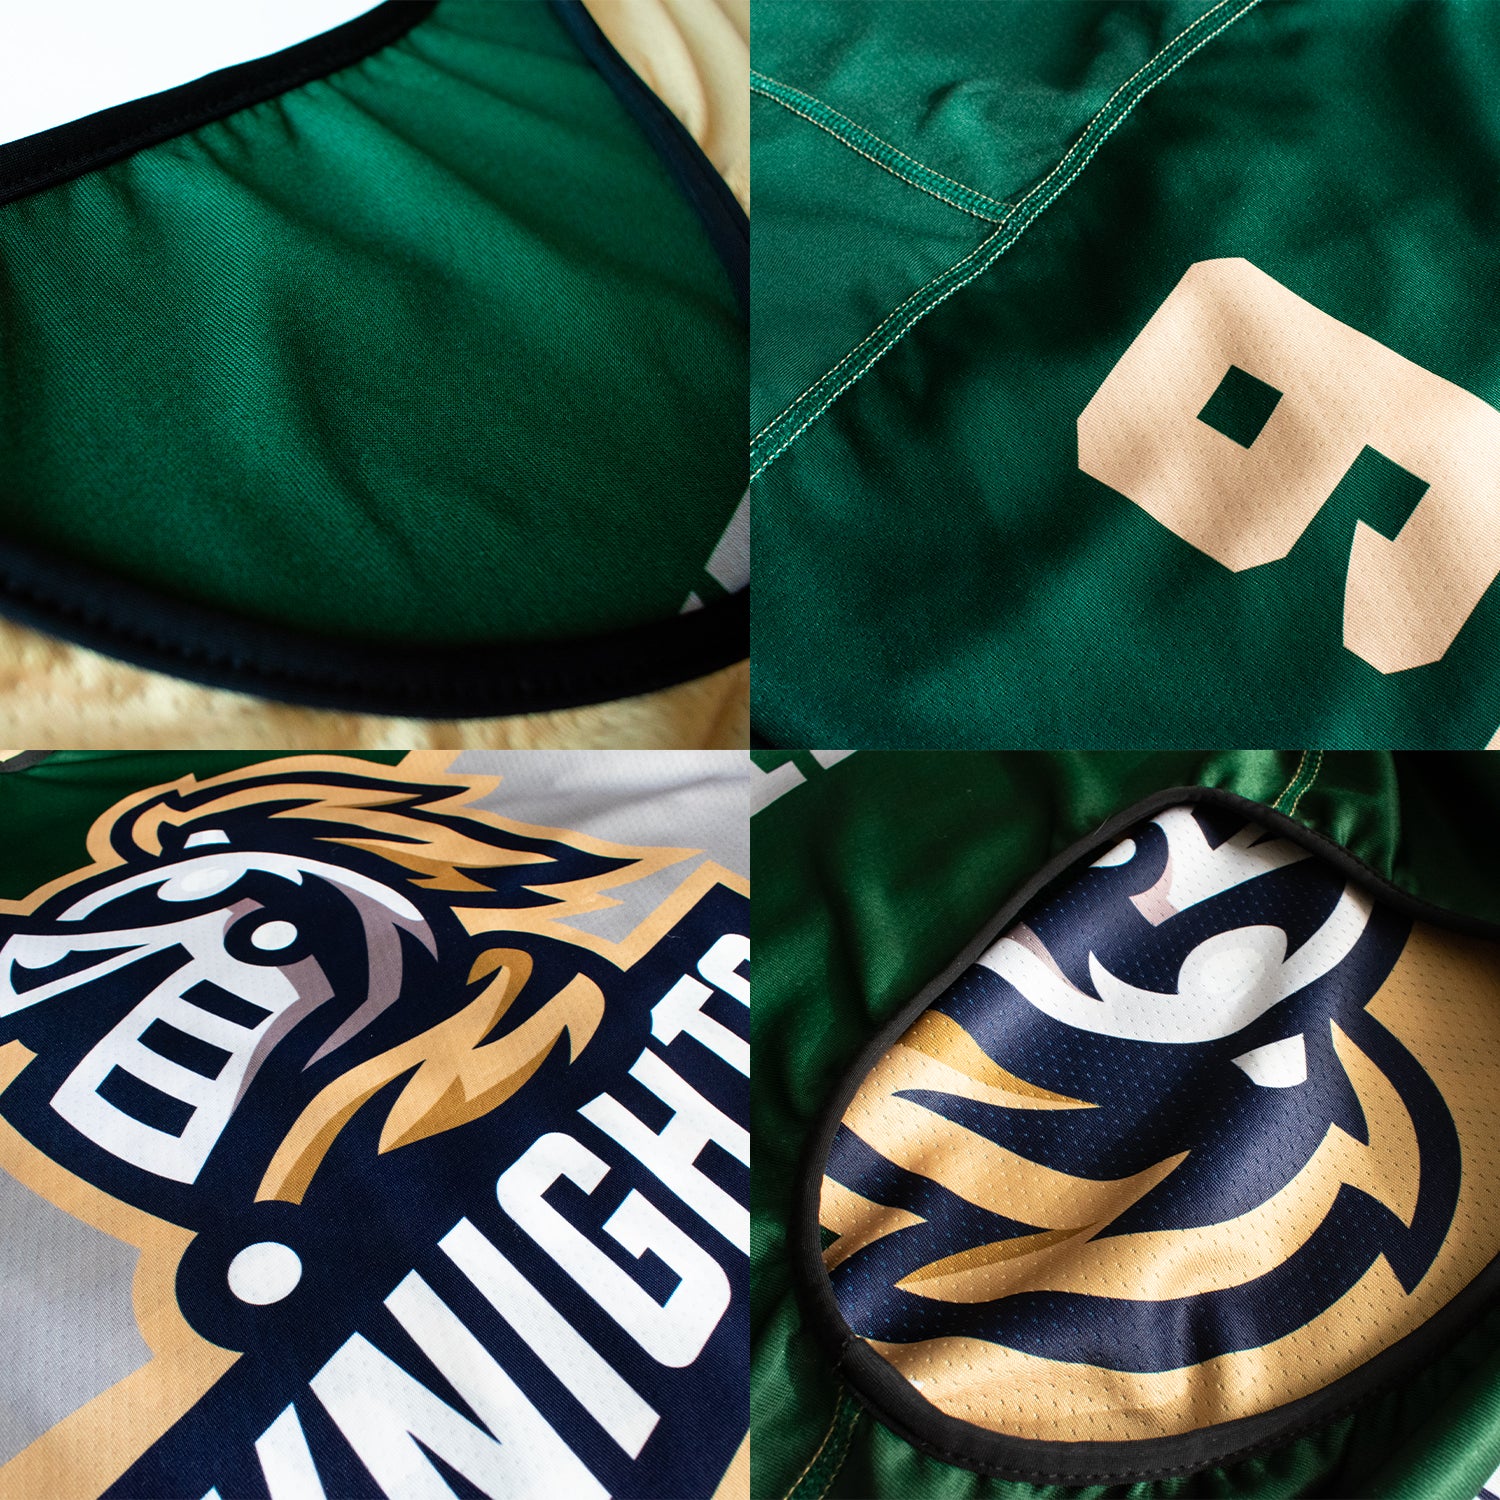 Green Gold Purple Sublimated Hockey Jerseys Custom Design | YoungSpeeds